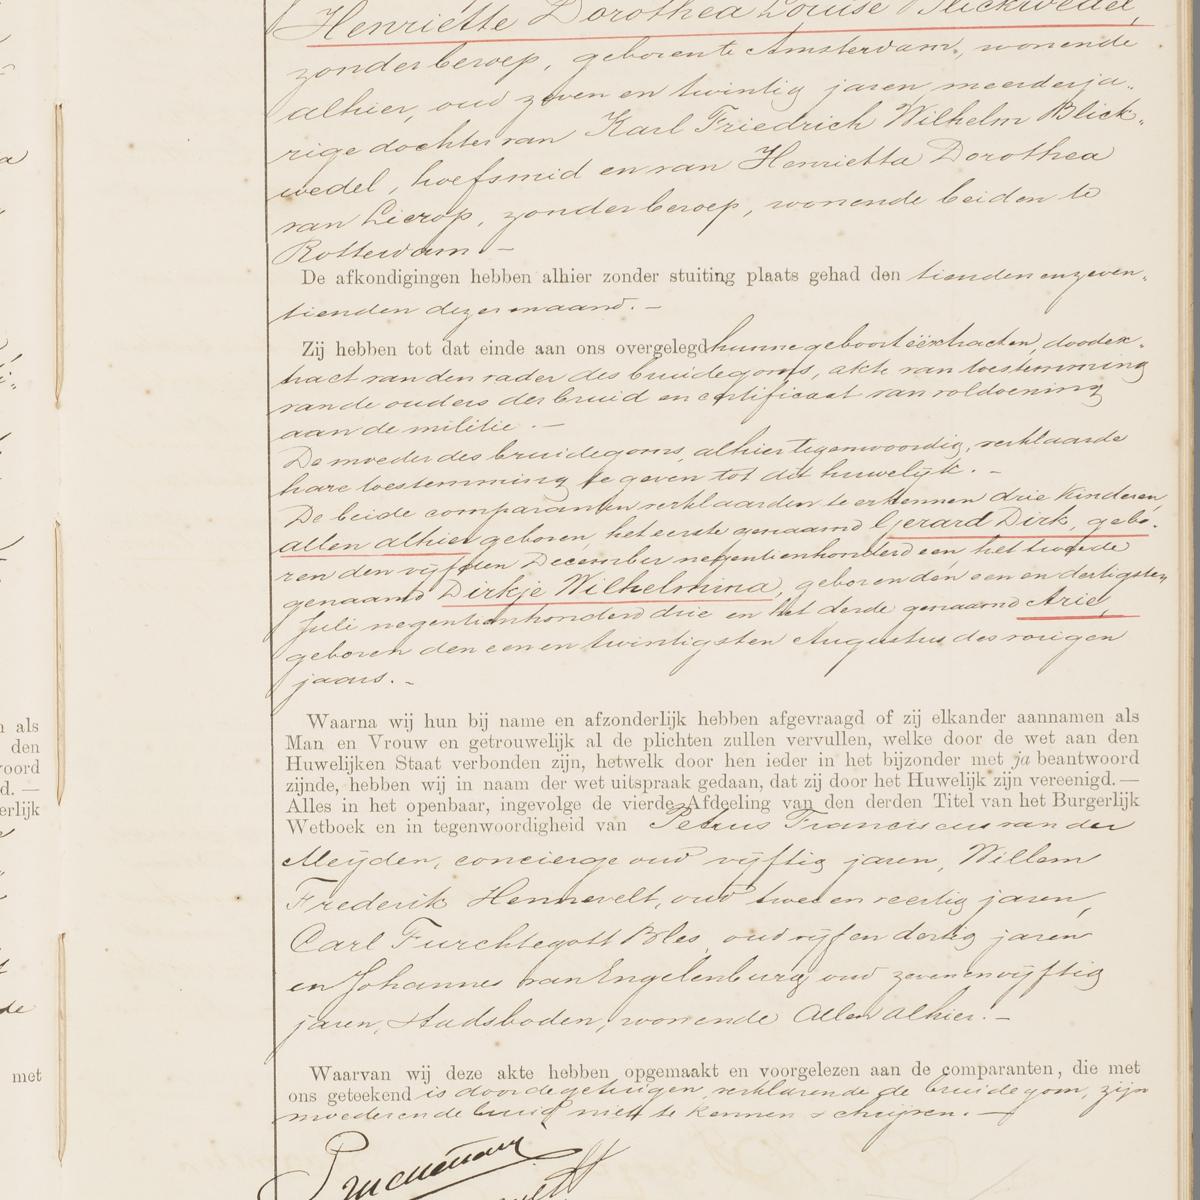 Civil registry of marriages, Utrecht, 1906, record 361